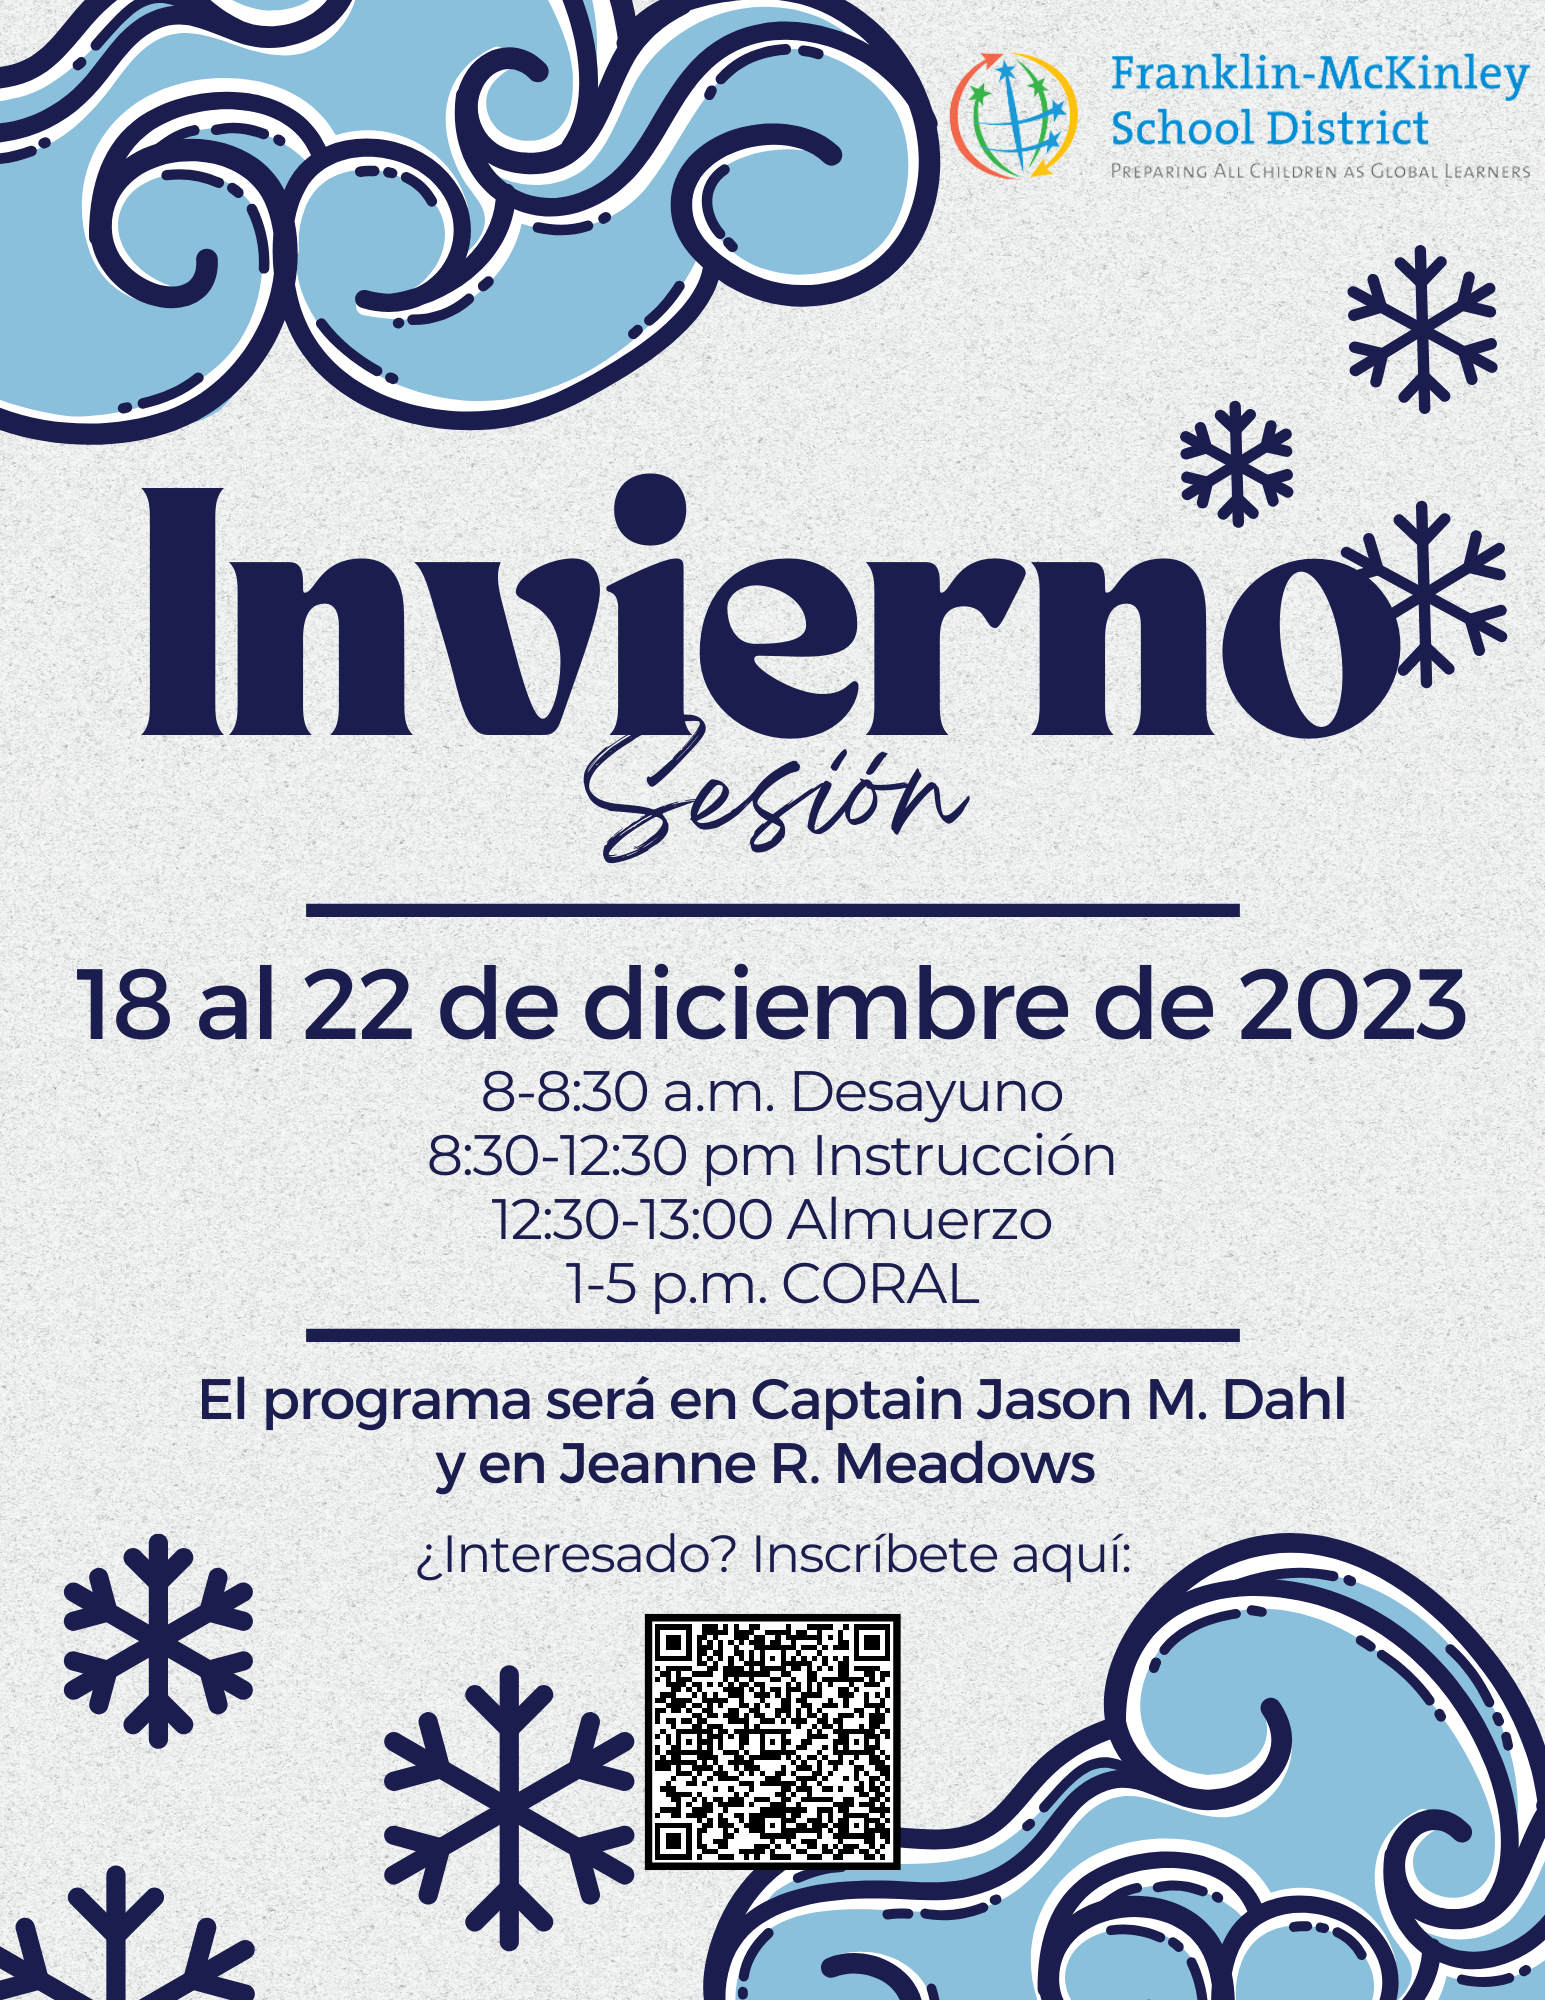 Spanish Winter Session Flyer